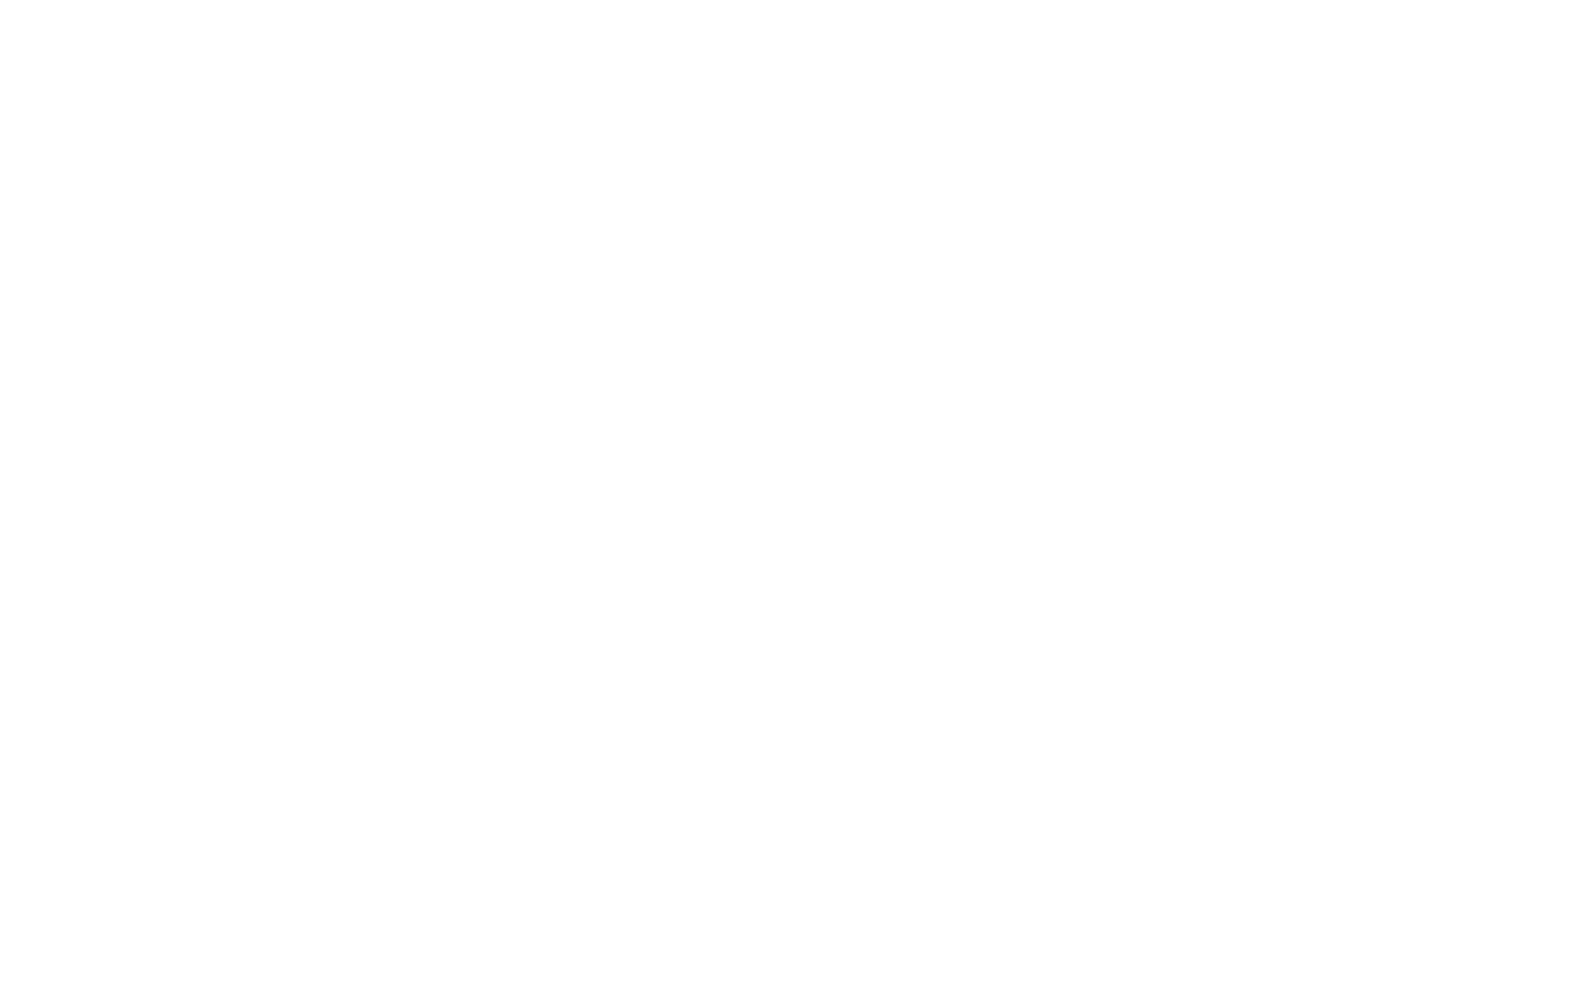 YIELD SEC Logotype